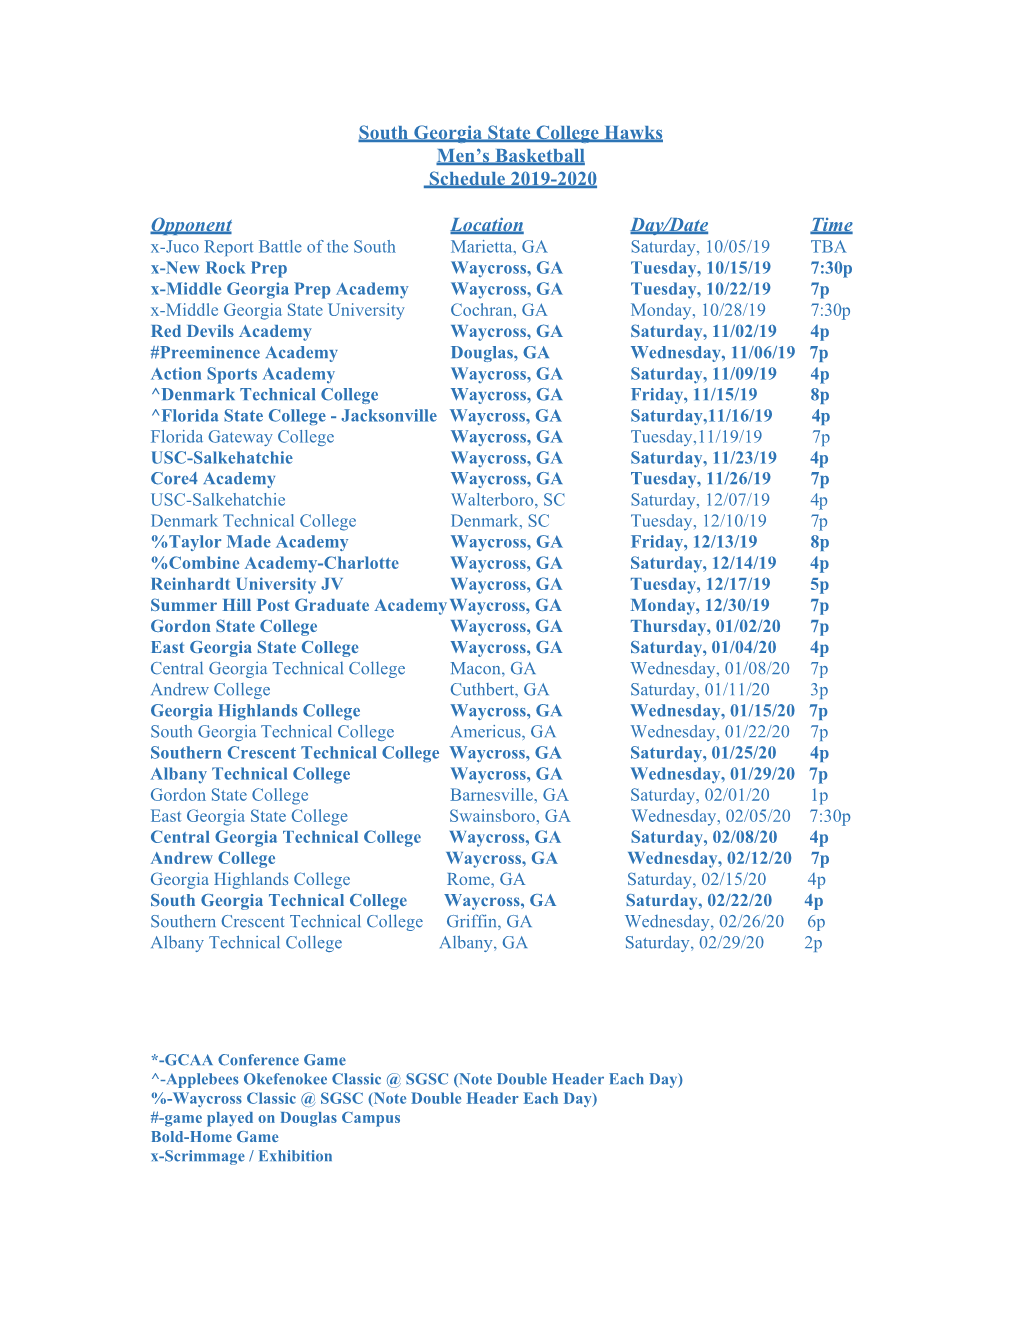 South Georgia State College Hawks Men's Basketball Schedule 2019